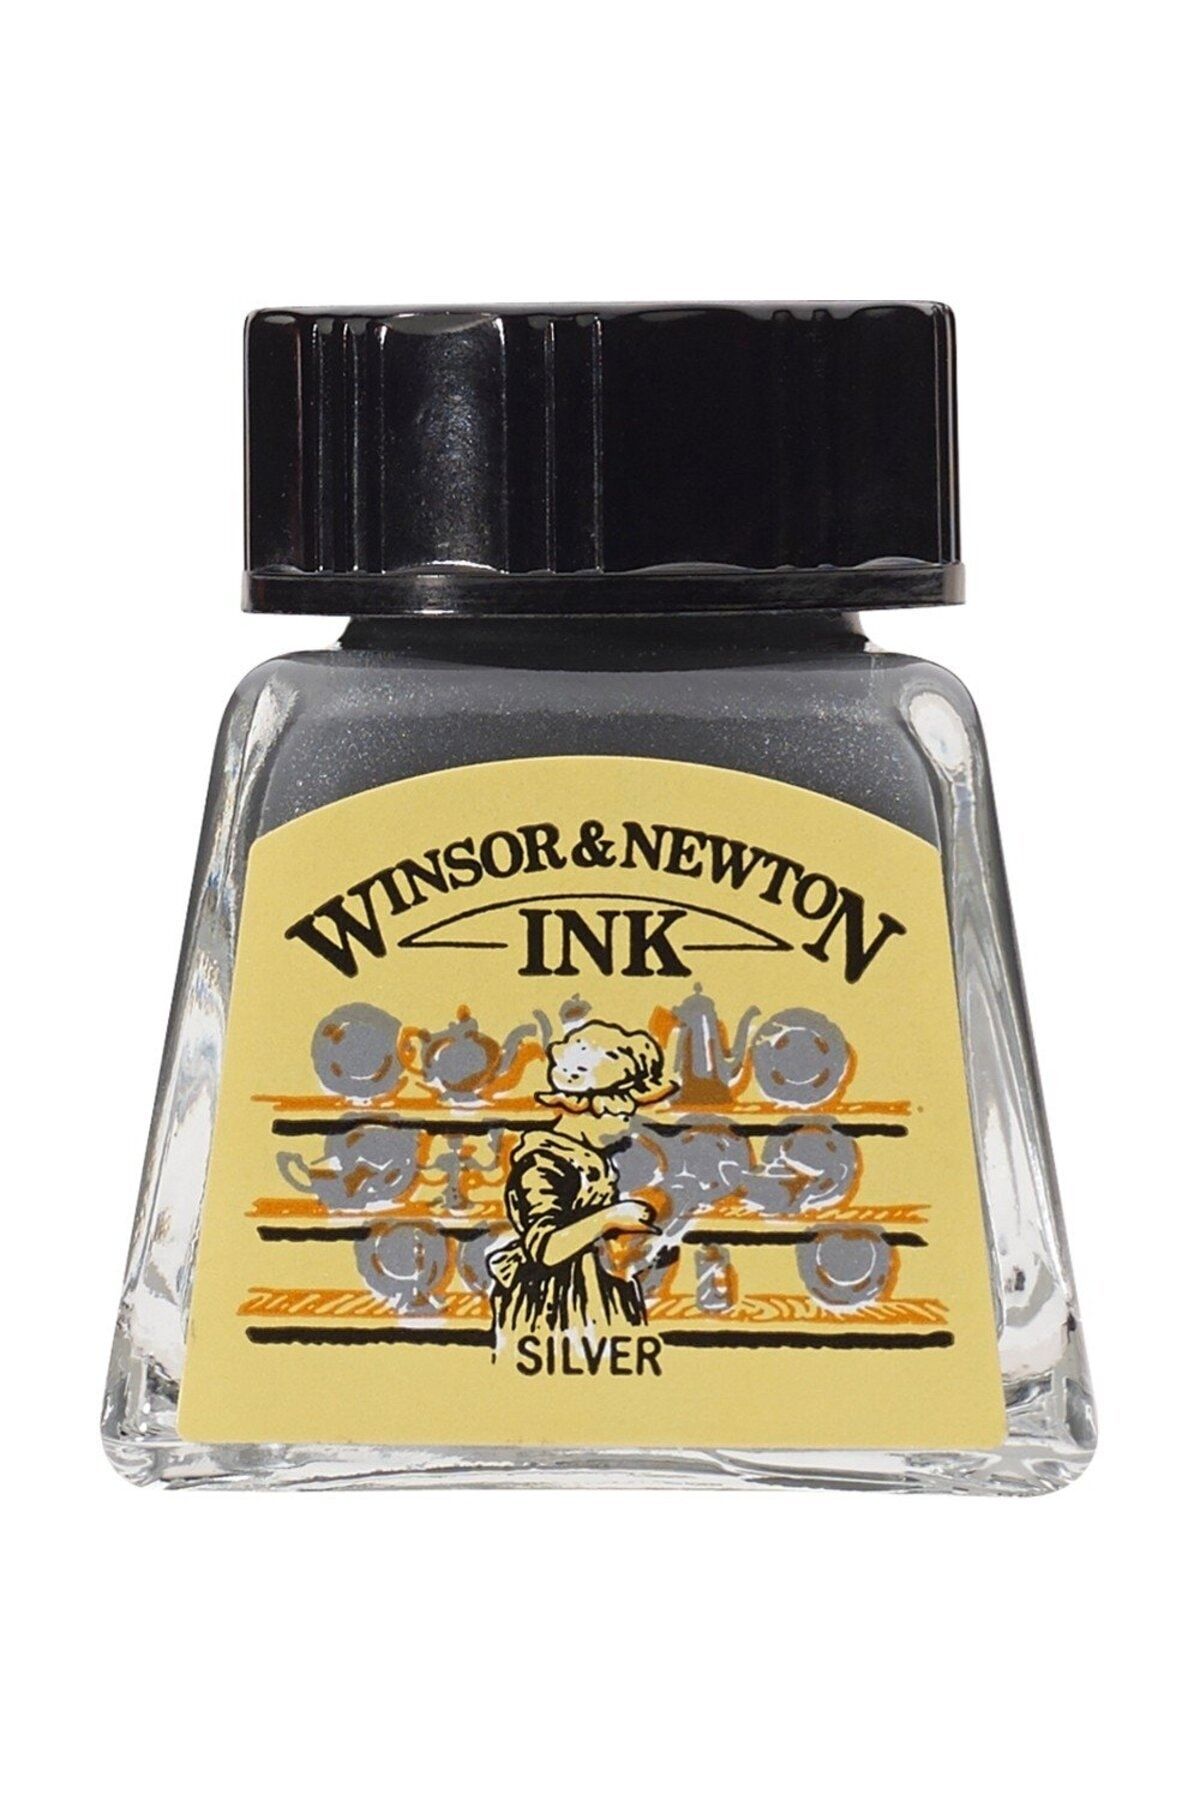 Winsor Newton Drawing Ink Çini Mürekkebi 14ml 617 Silver